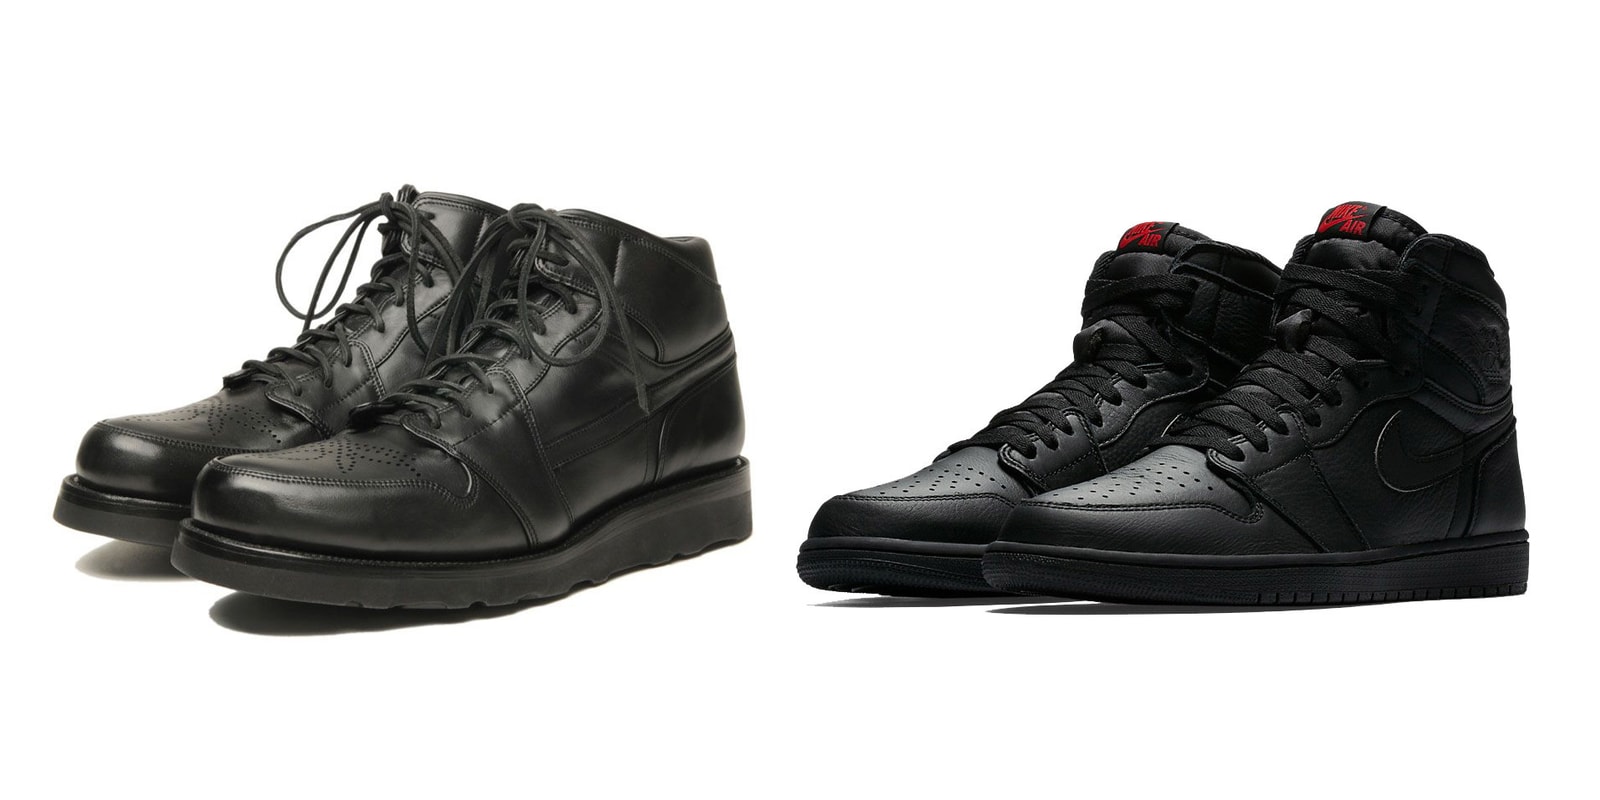 Yuketen 以 Air Jordan 1 為靈感打造全新「Land Jordan First」靴款